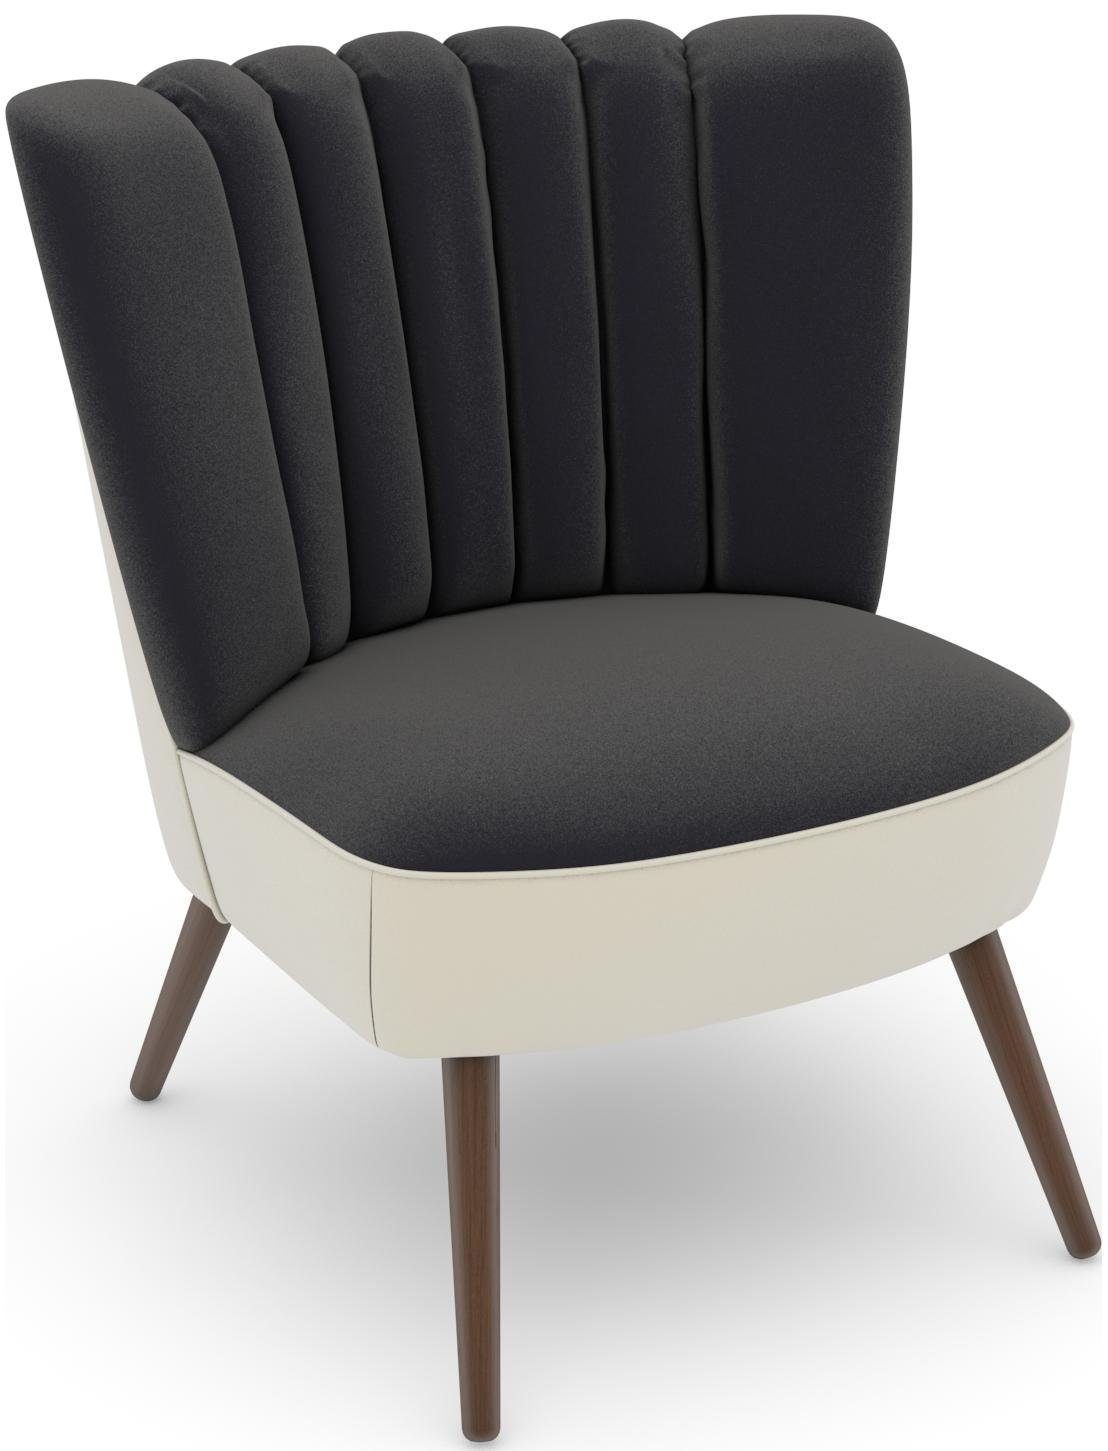 Max Winzer® Fauteuil Aspen - Build-a-chair Aspen in retro-look, om zelf te stylen